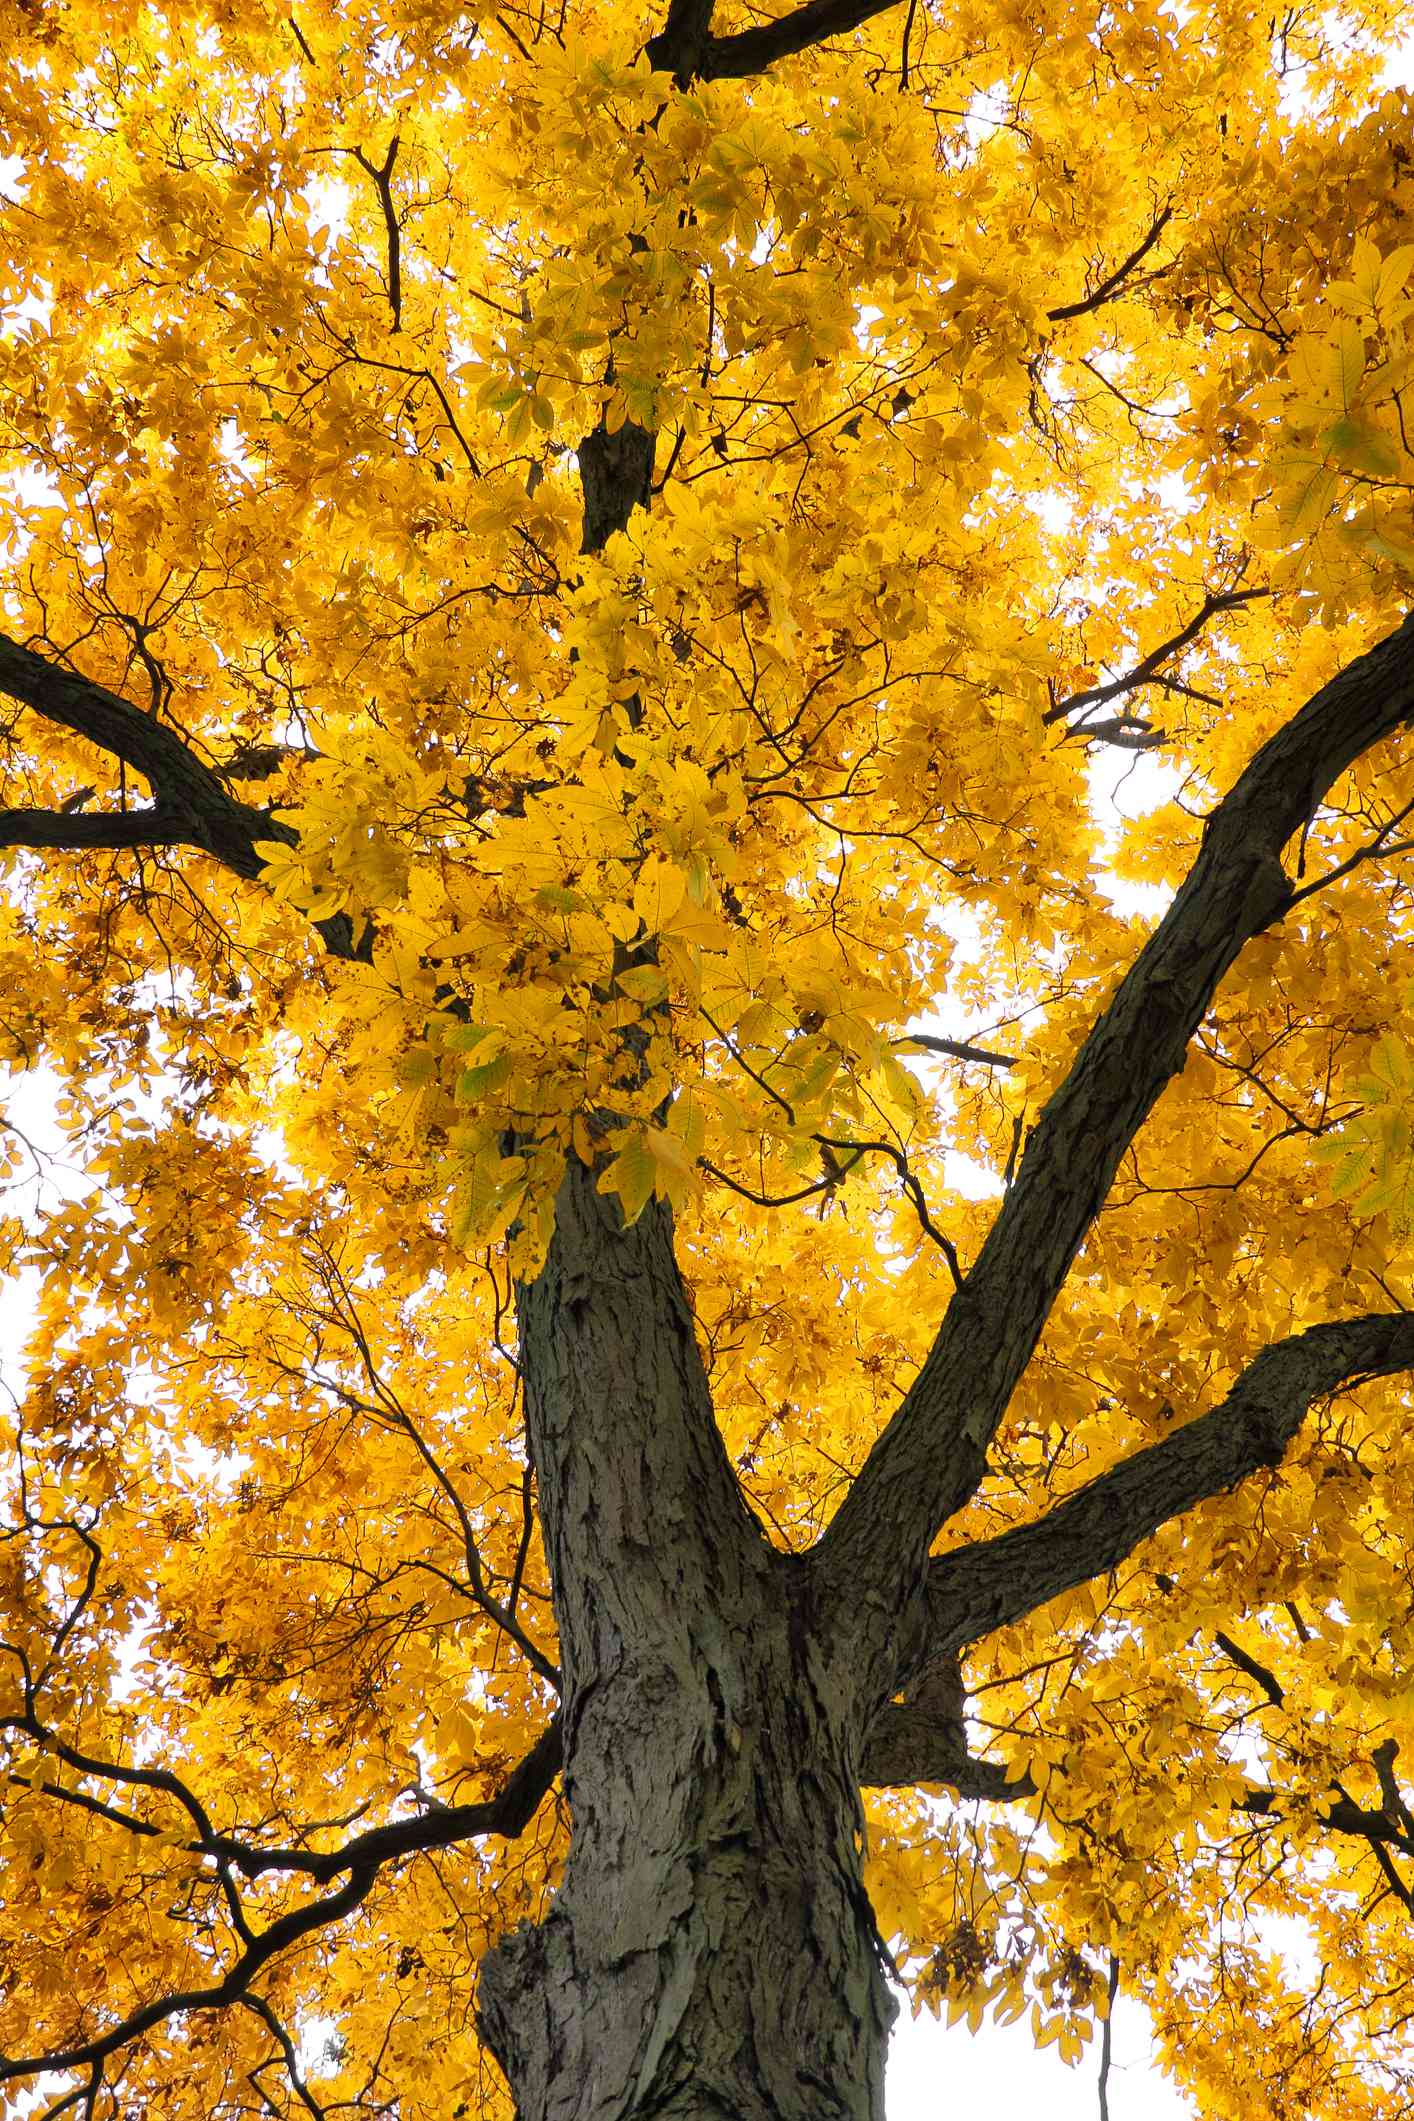 hickory trees such as this shagbark hickory tree